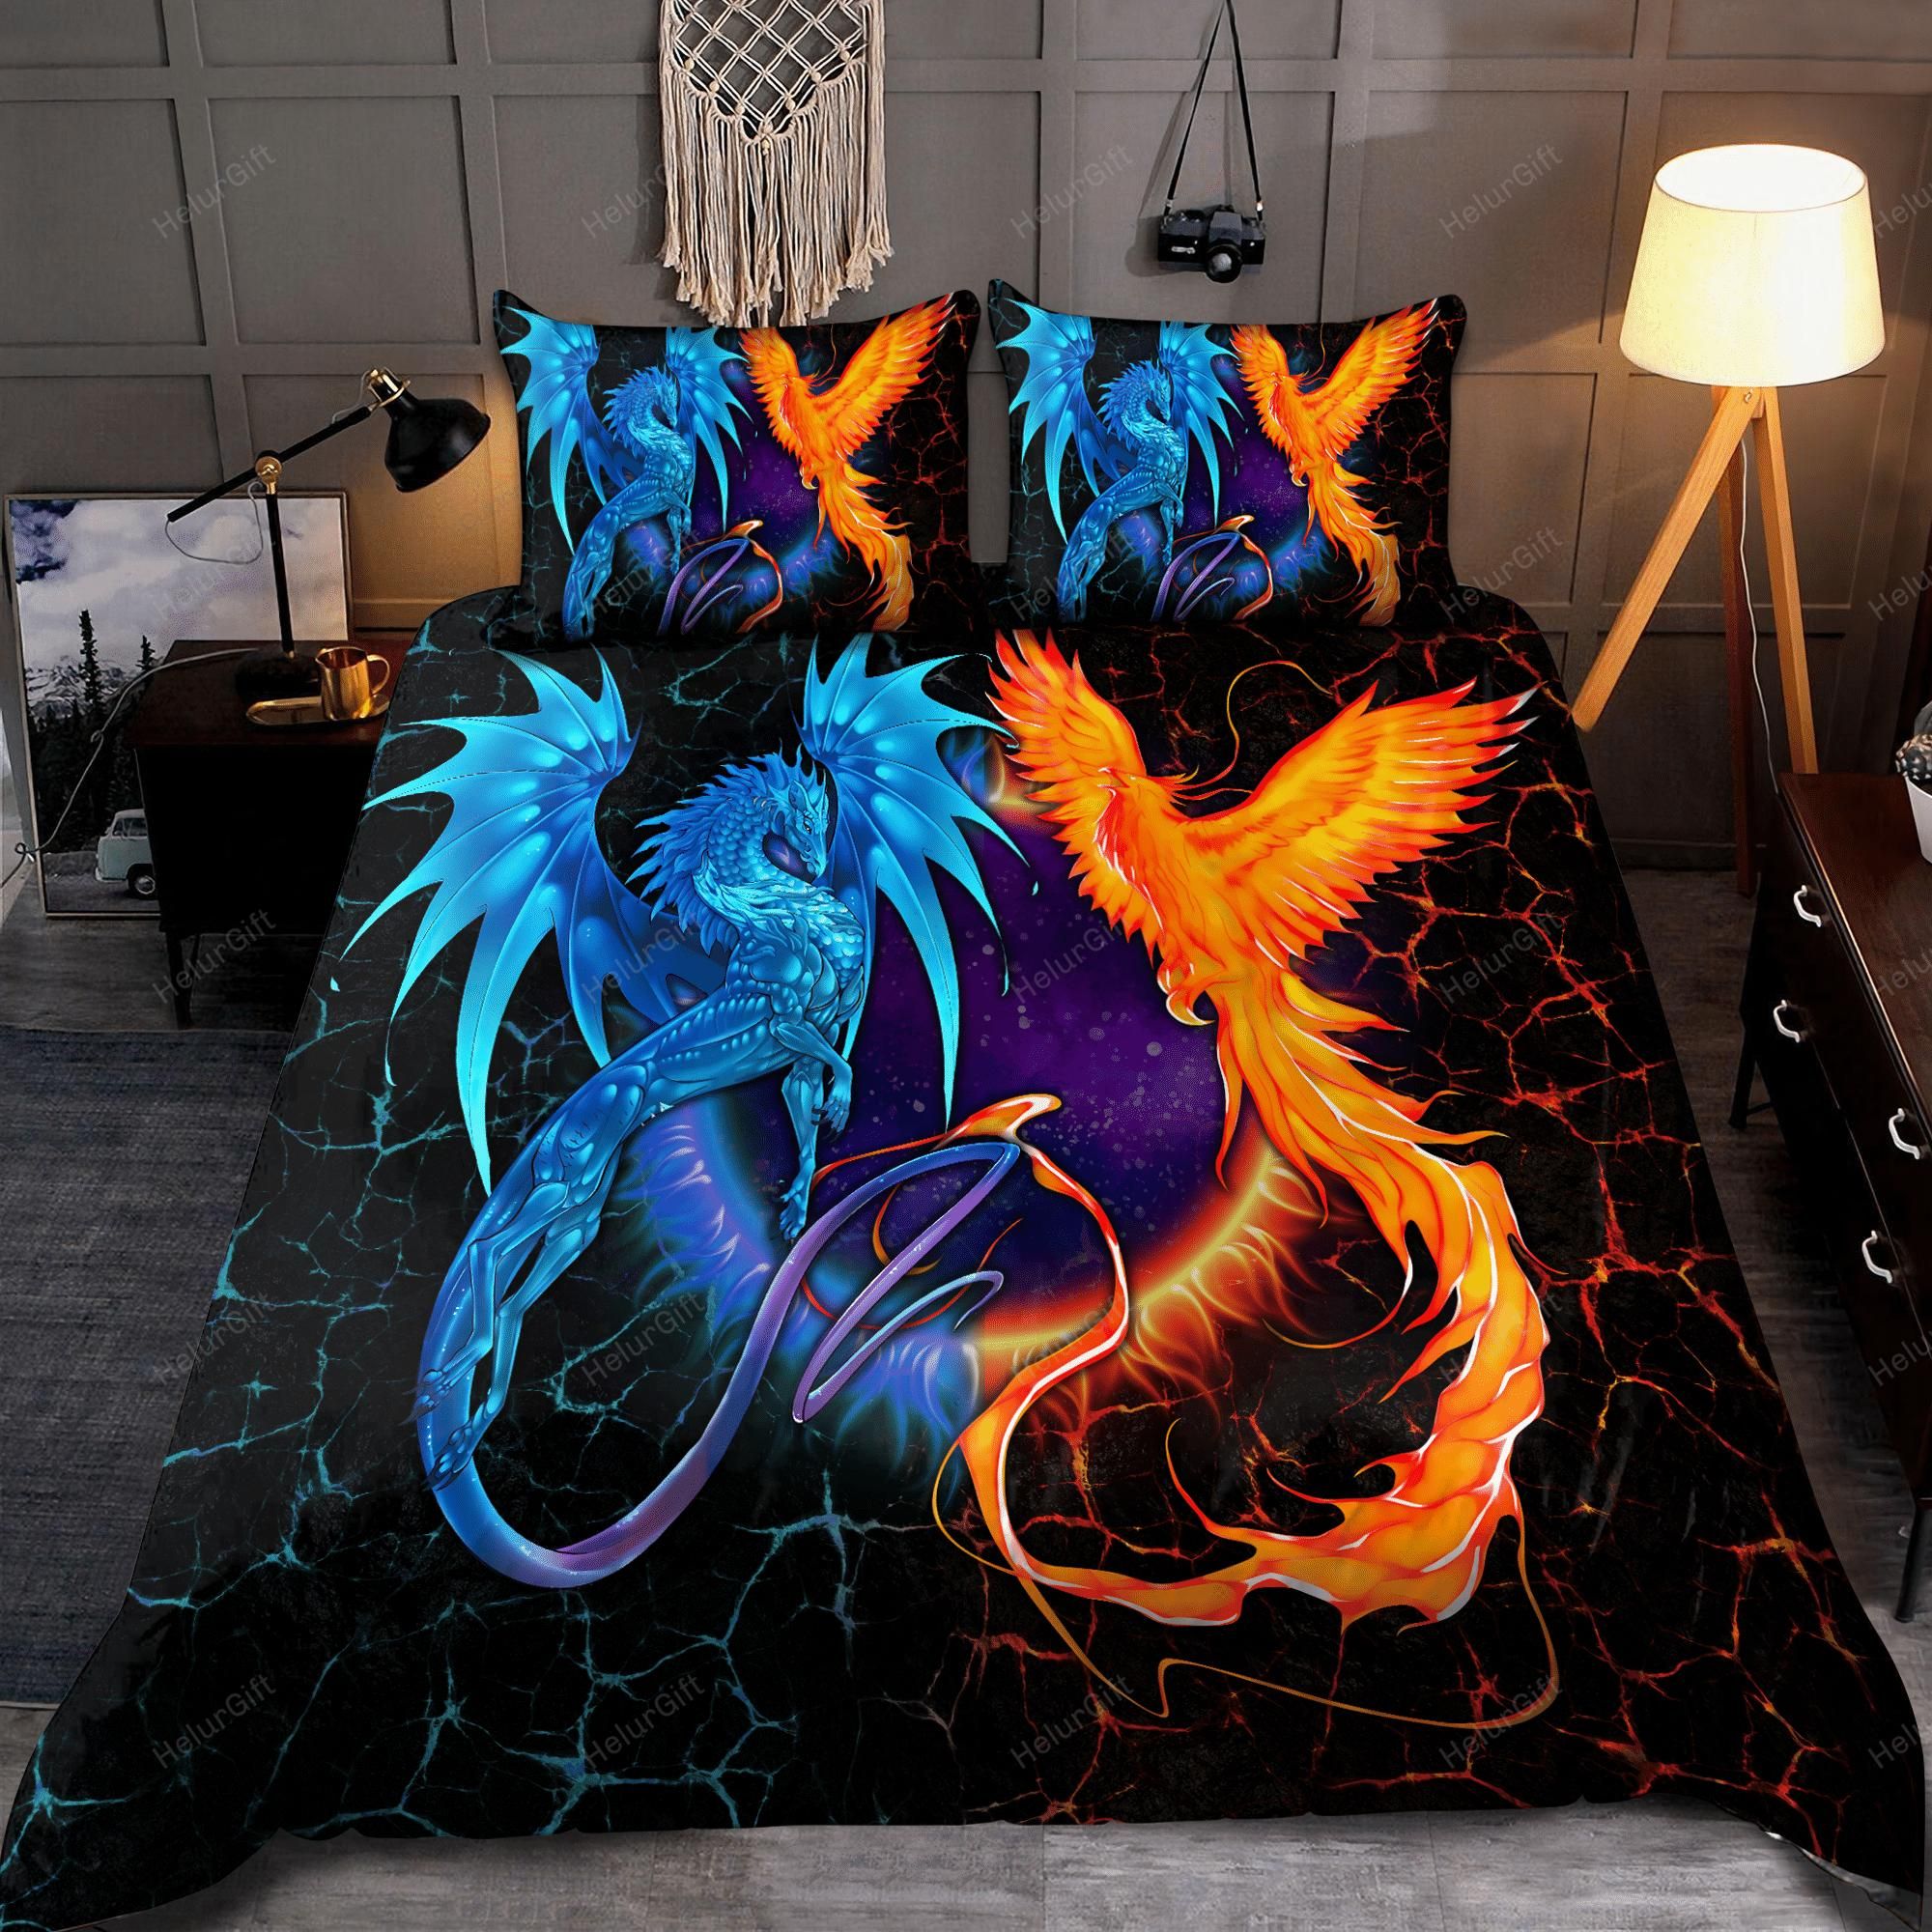 Dragon & phoenix bedding set